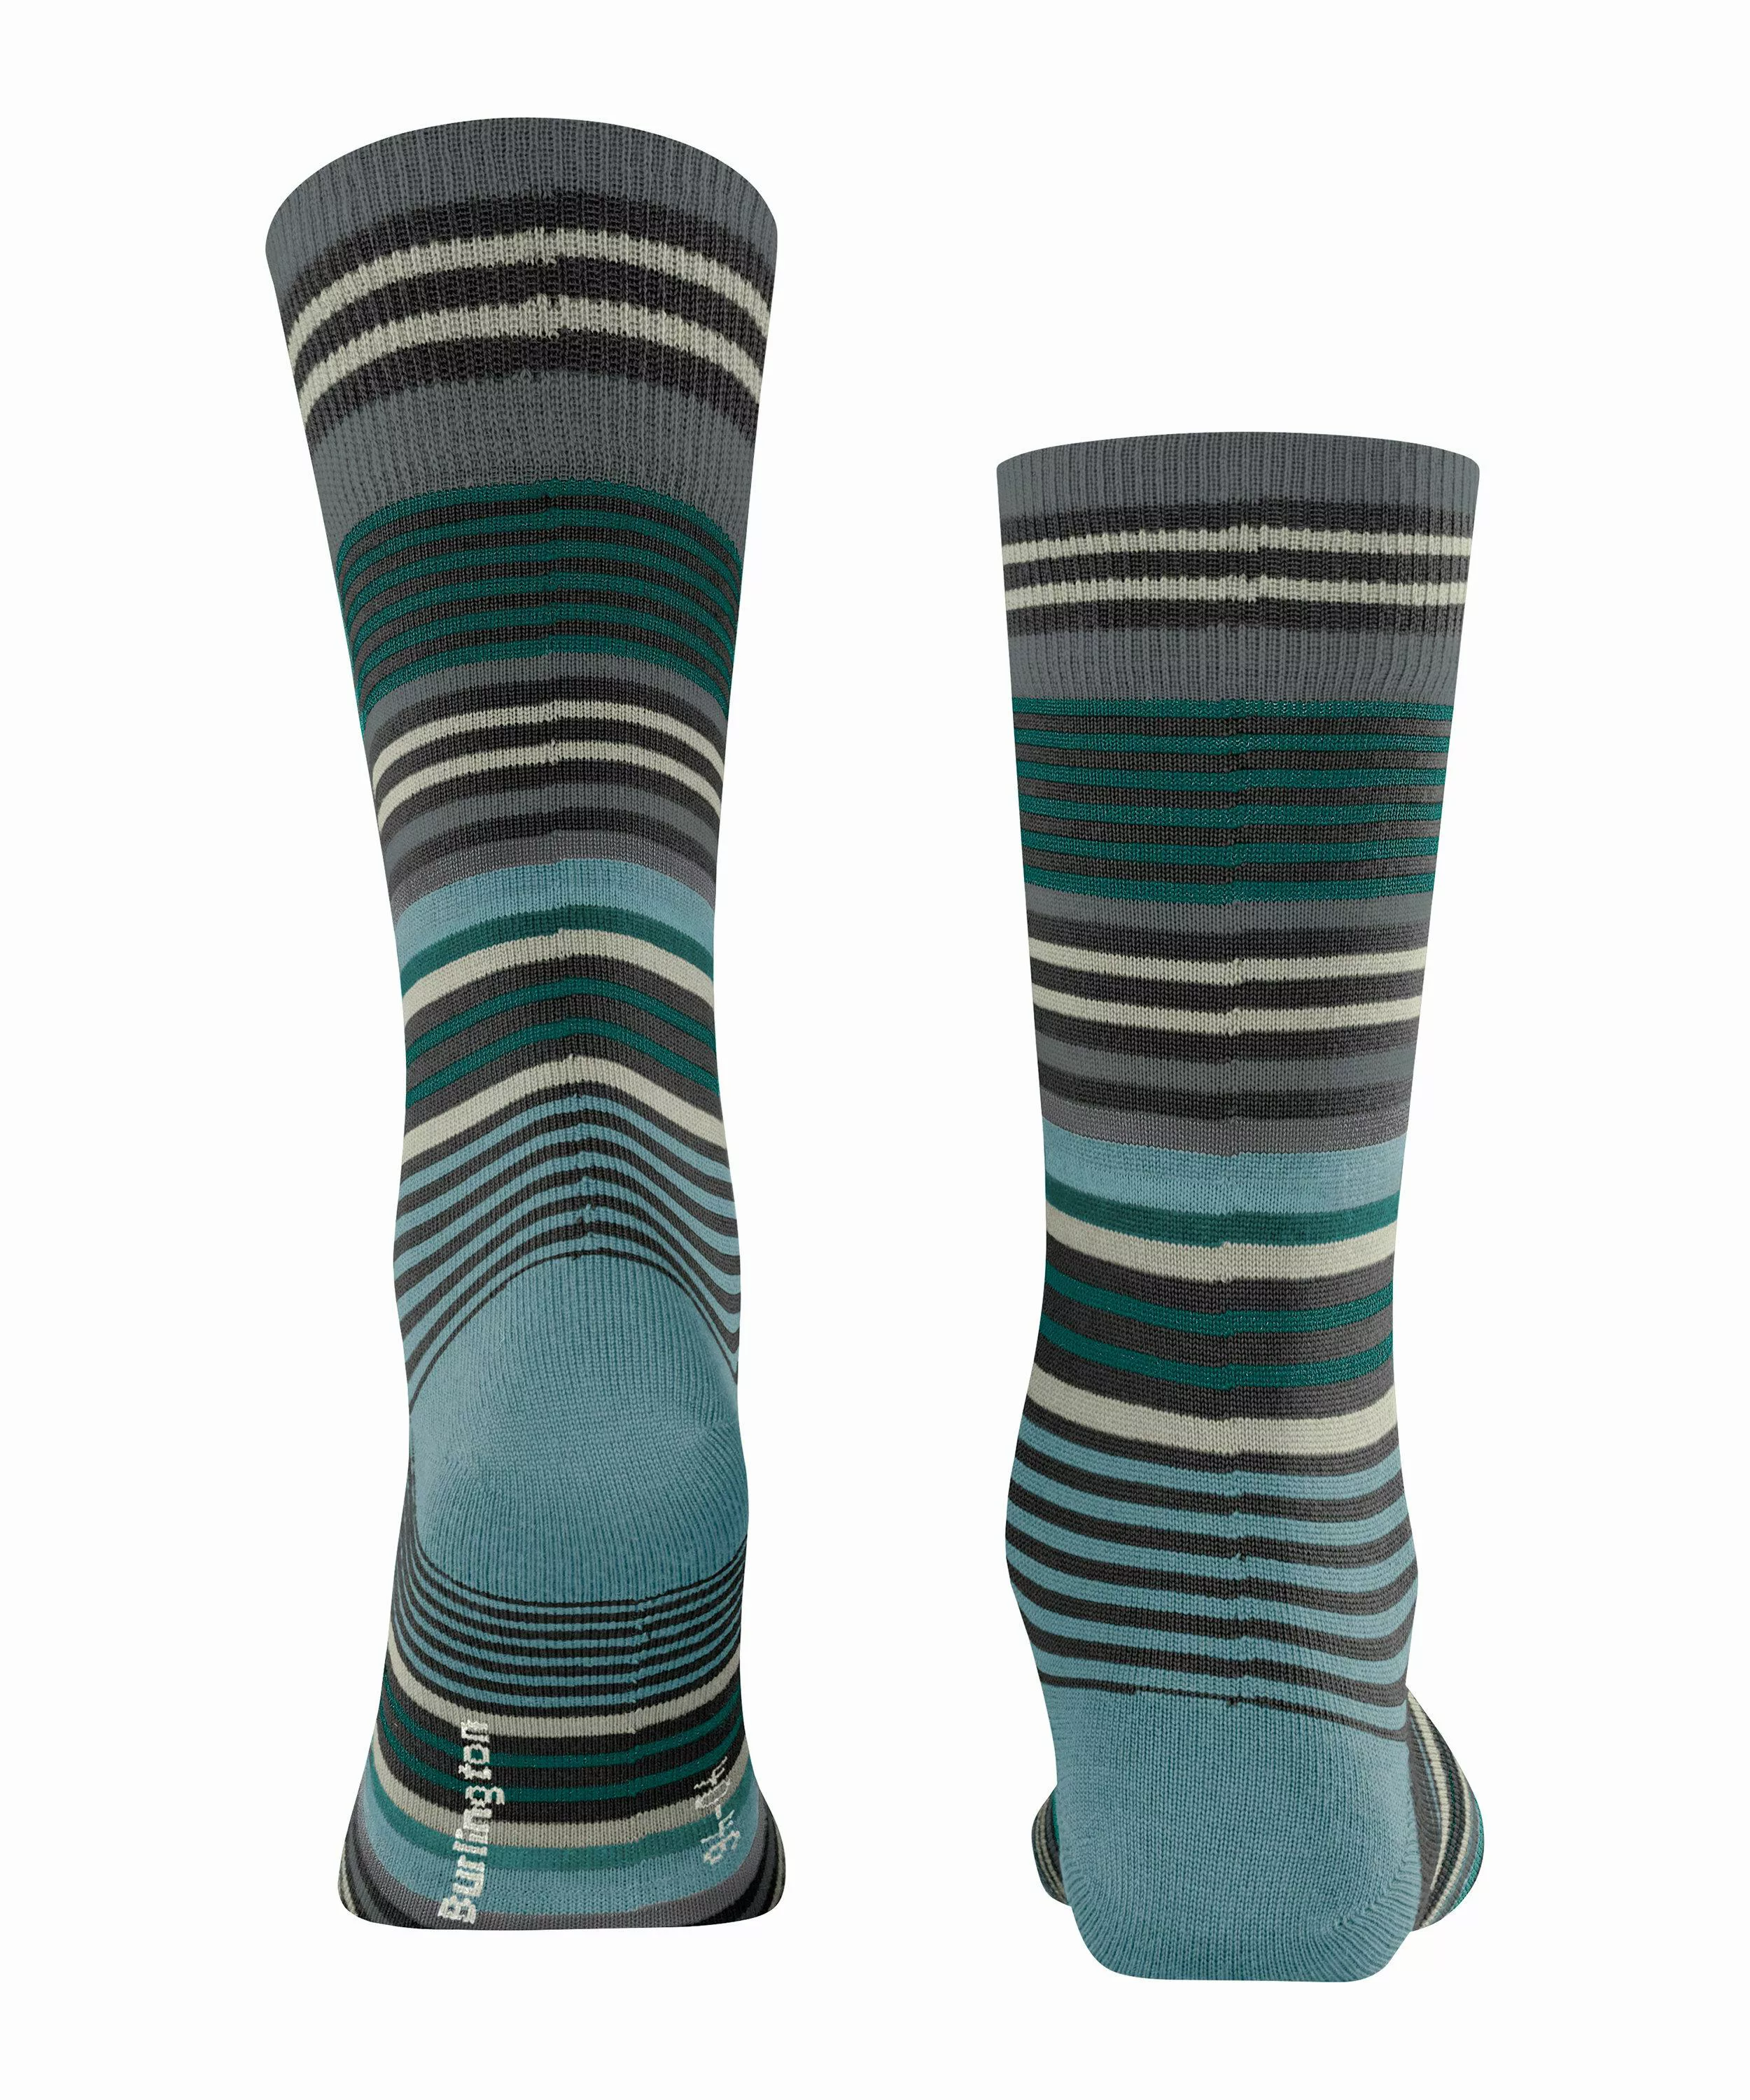 Burlington Herren Socken Stripe günstig online kaufen